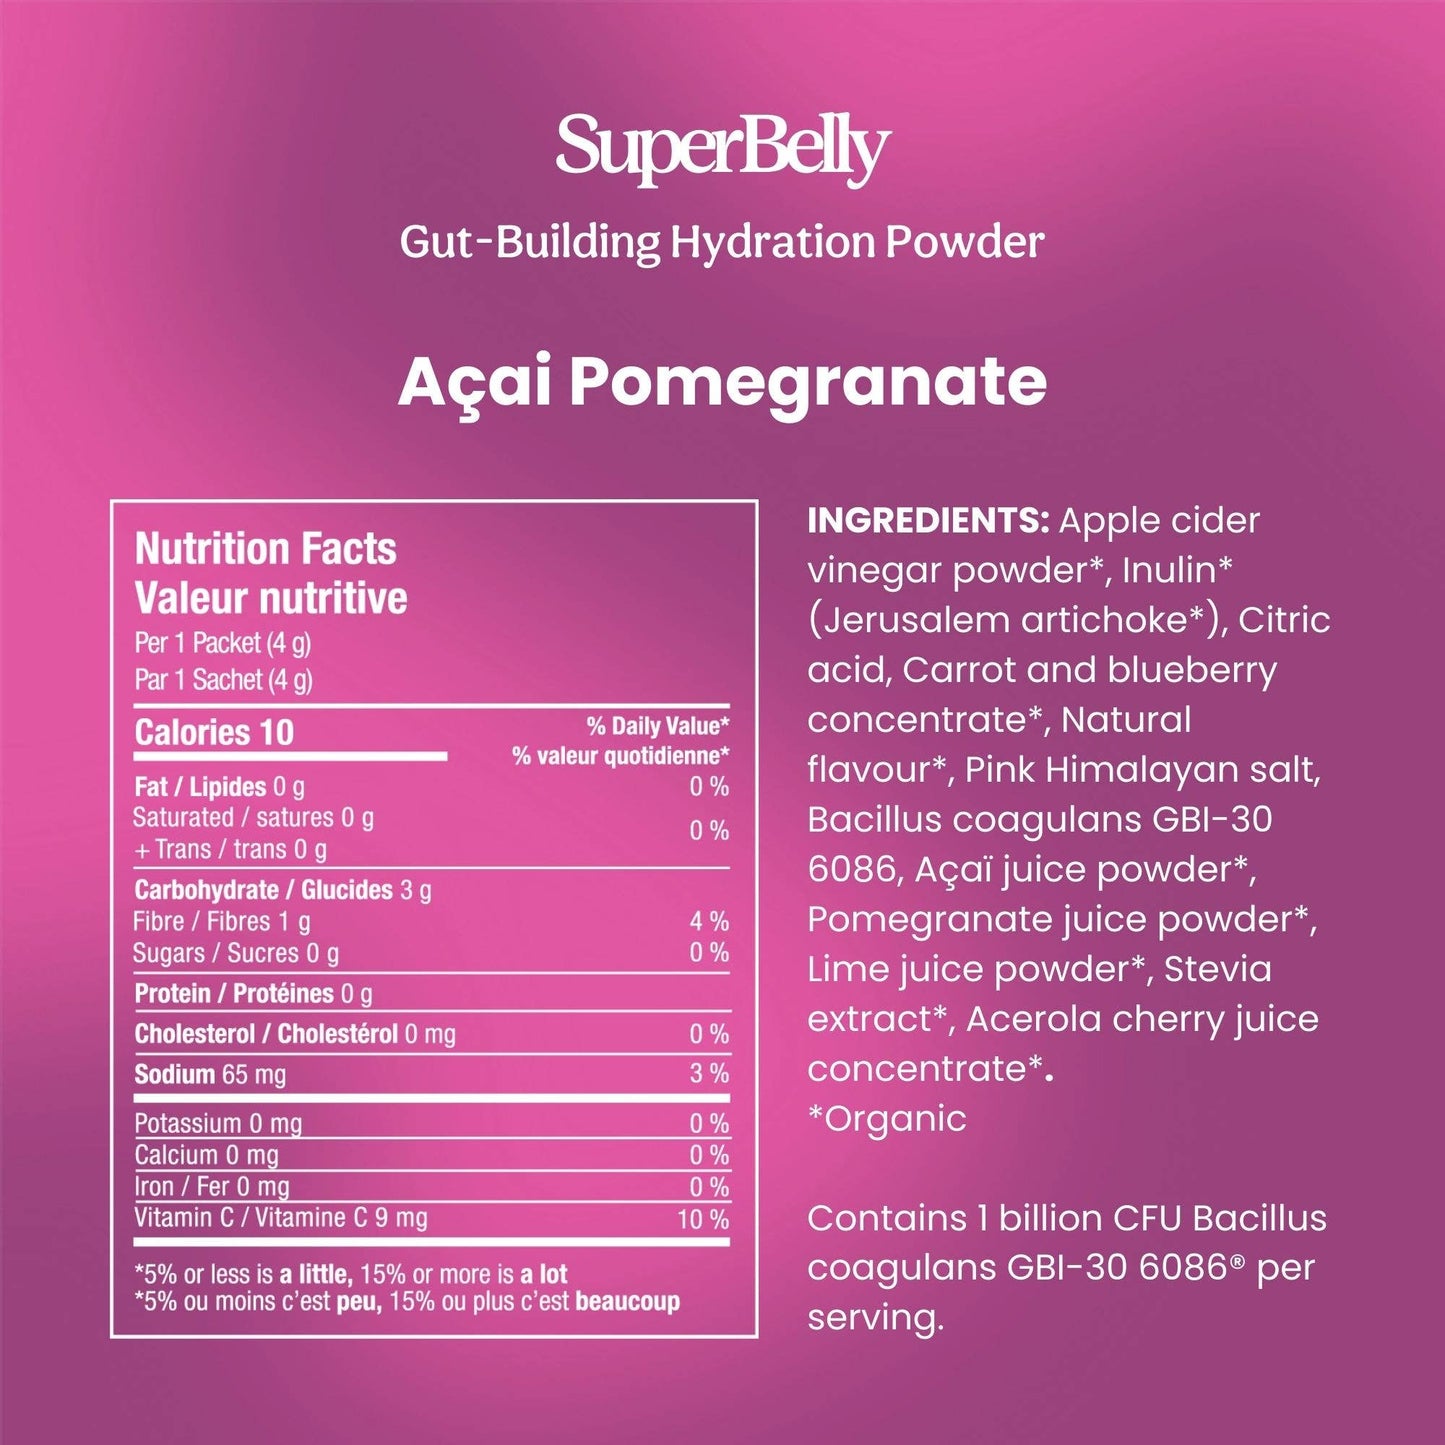 Blume - SuperBelly Hydration & Gut Mix, Açai Pomegranate